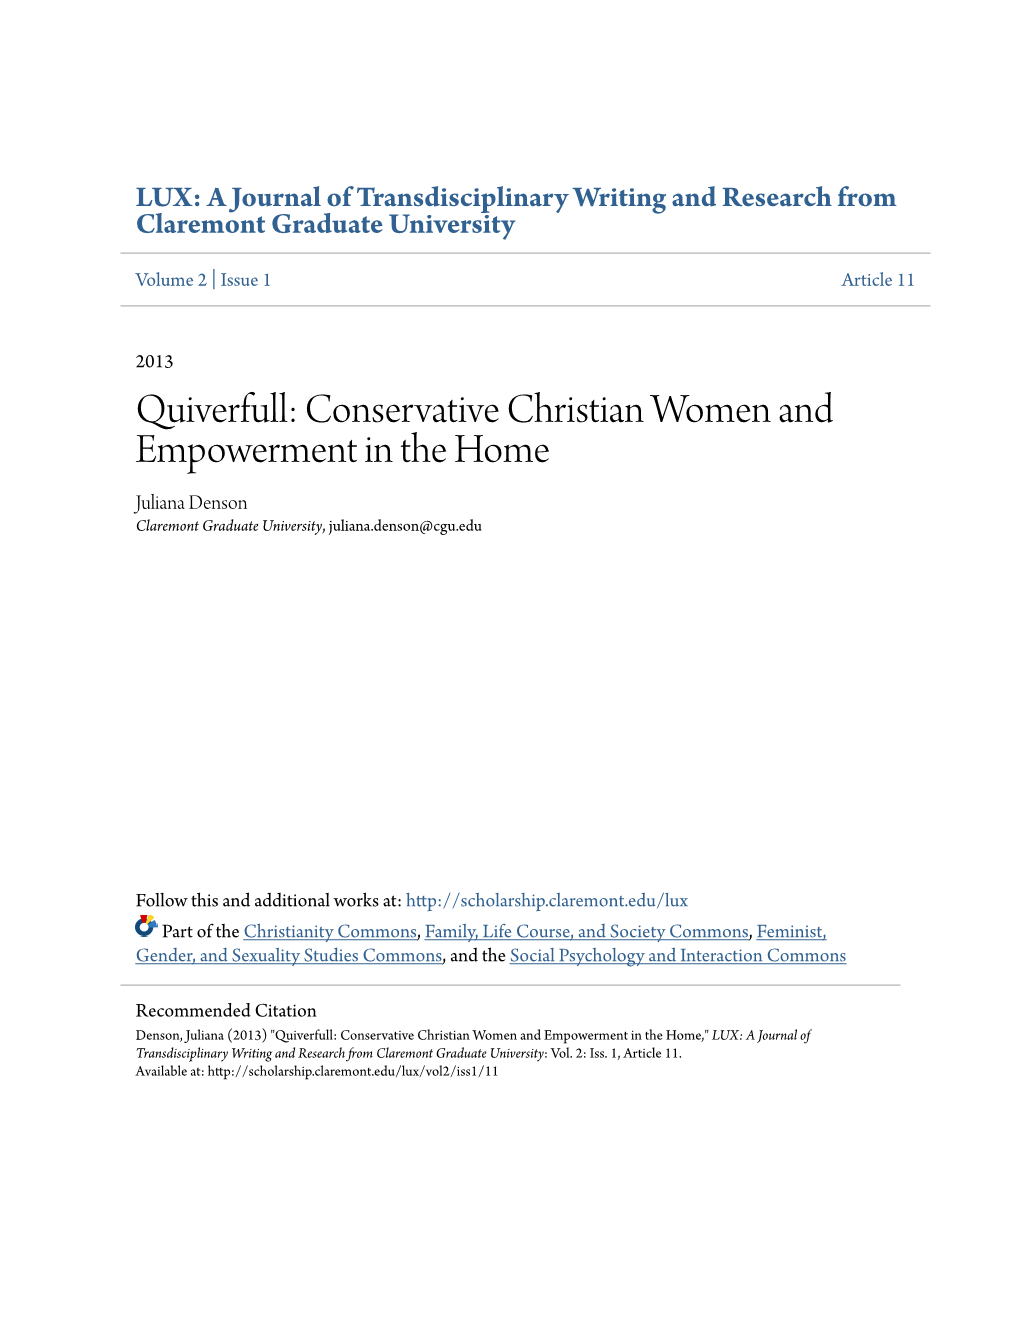 Quiverfull: Conservative Christian Women and Empowerment in the Home Juliana Denson Claremont Graduate University, Juliana.Denson@Cgu.Edu